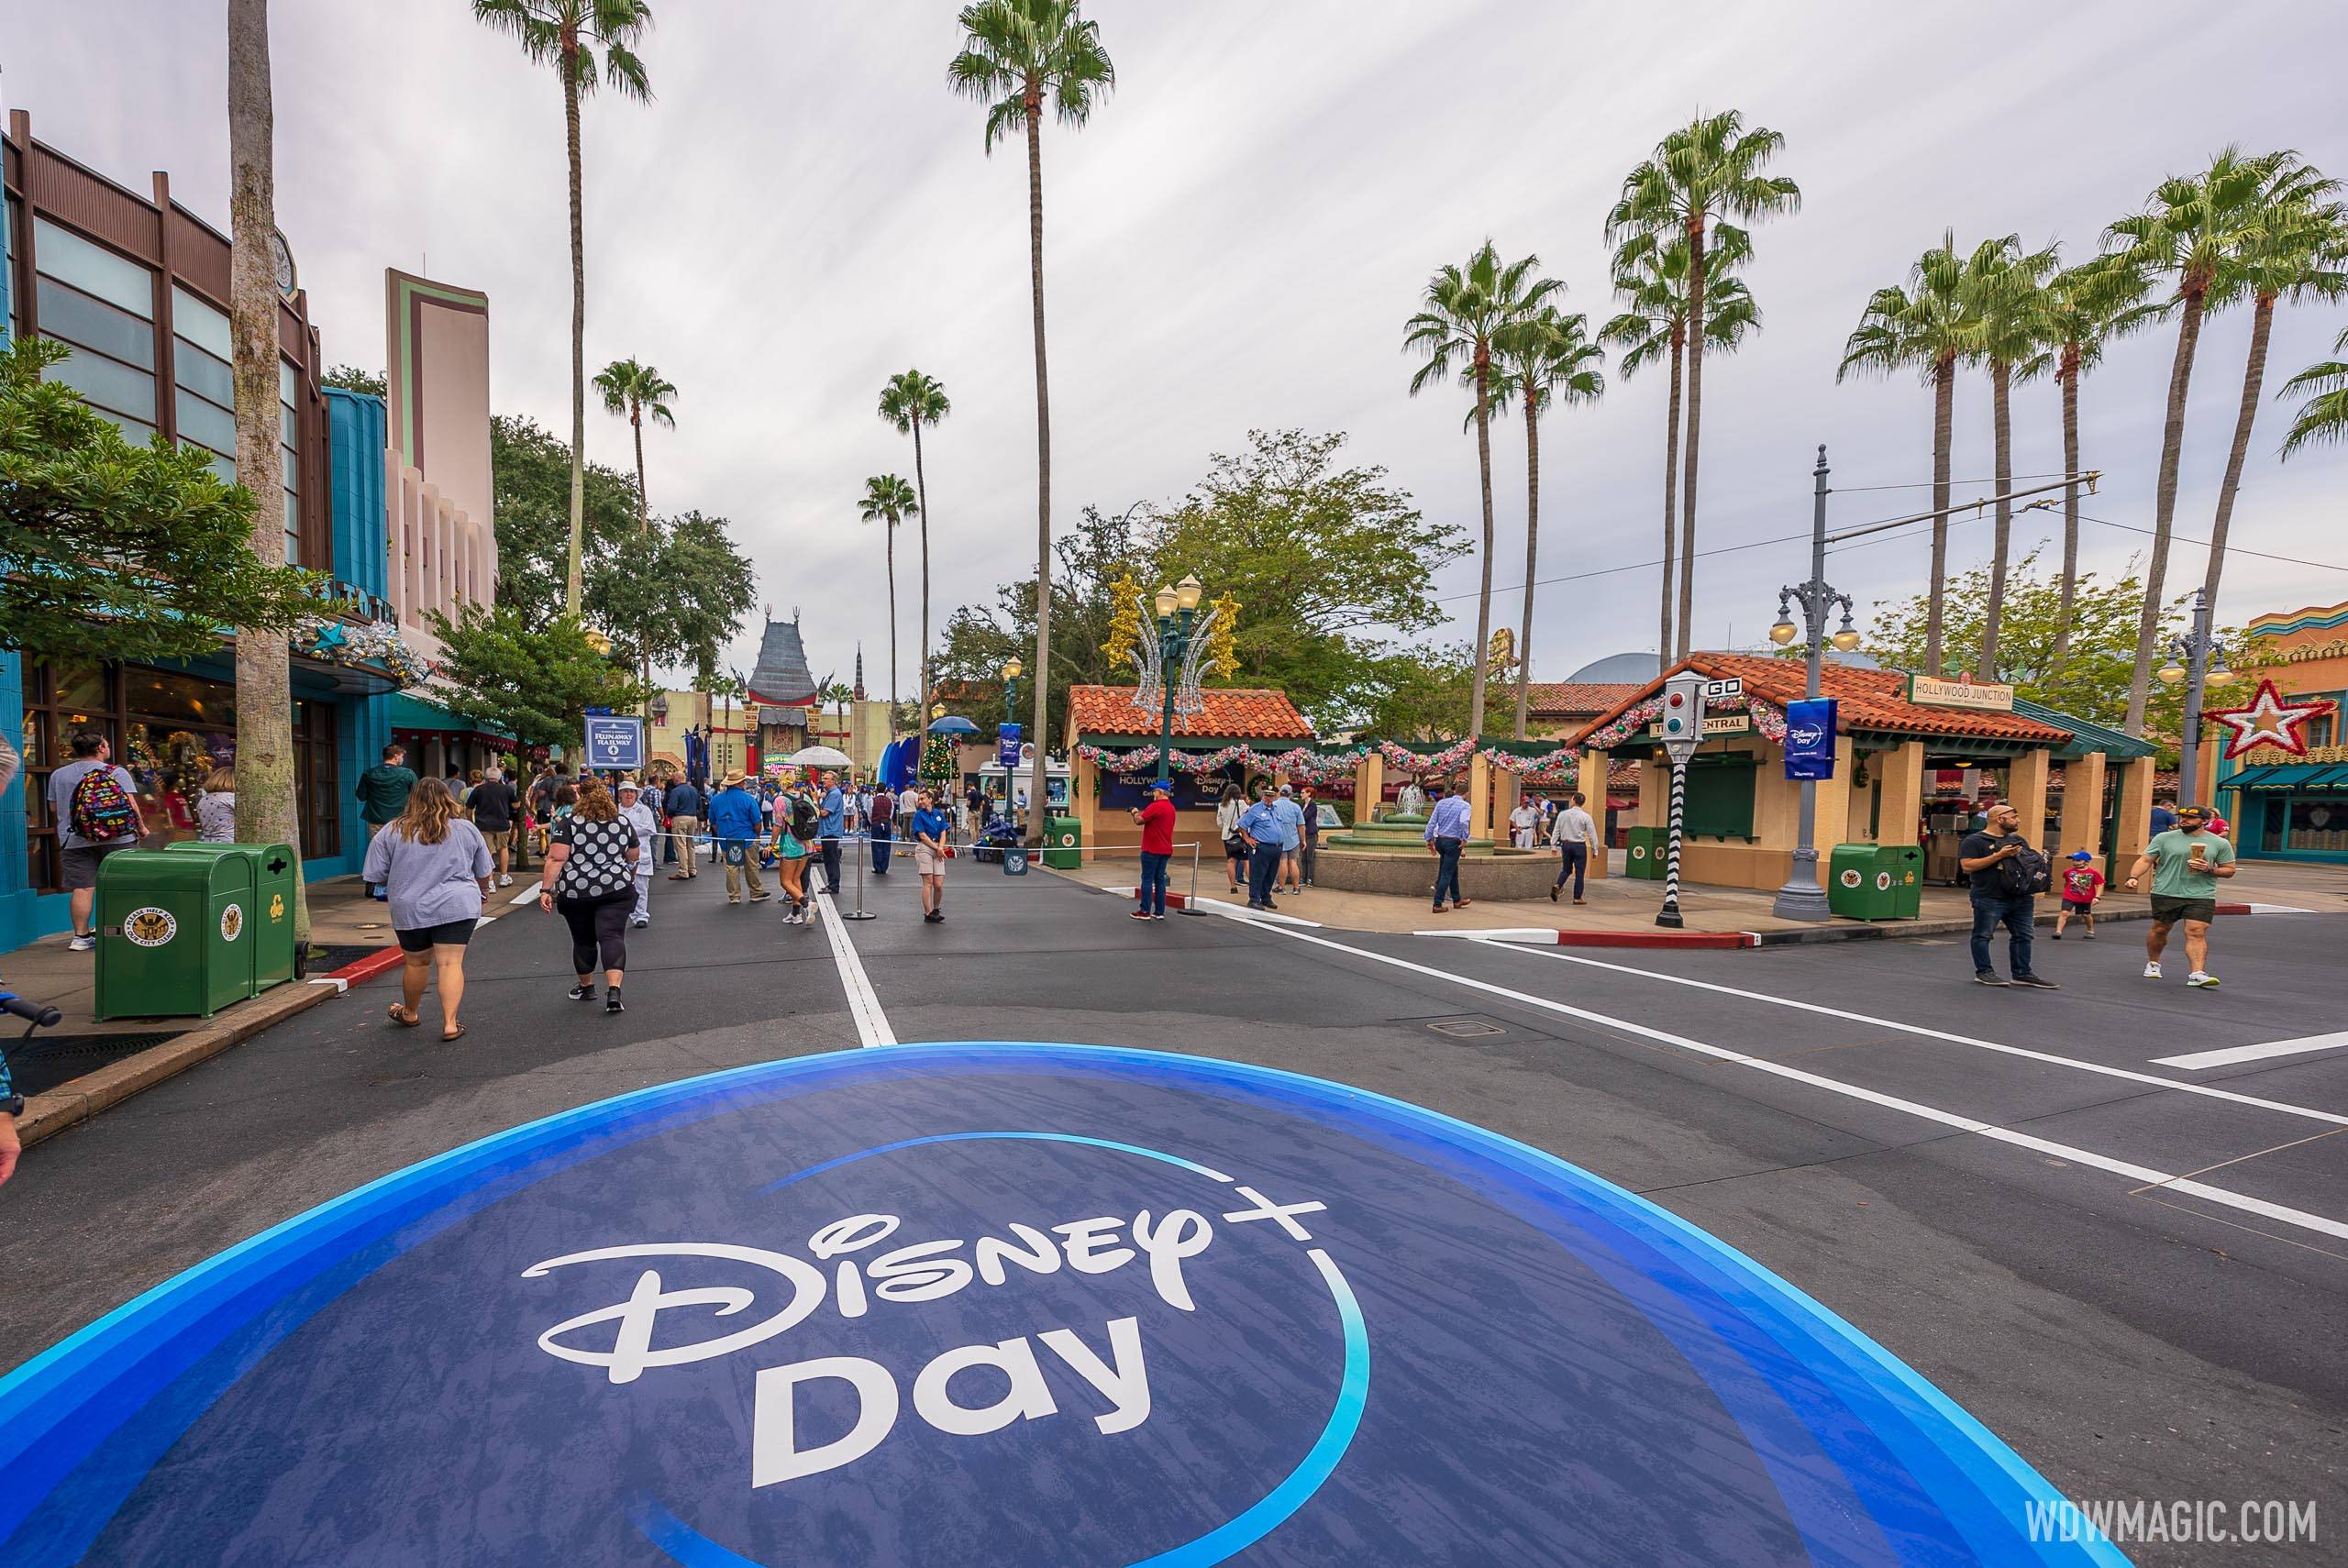 Disney+ Day at Disney's Hollywood Studios